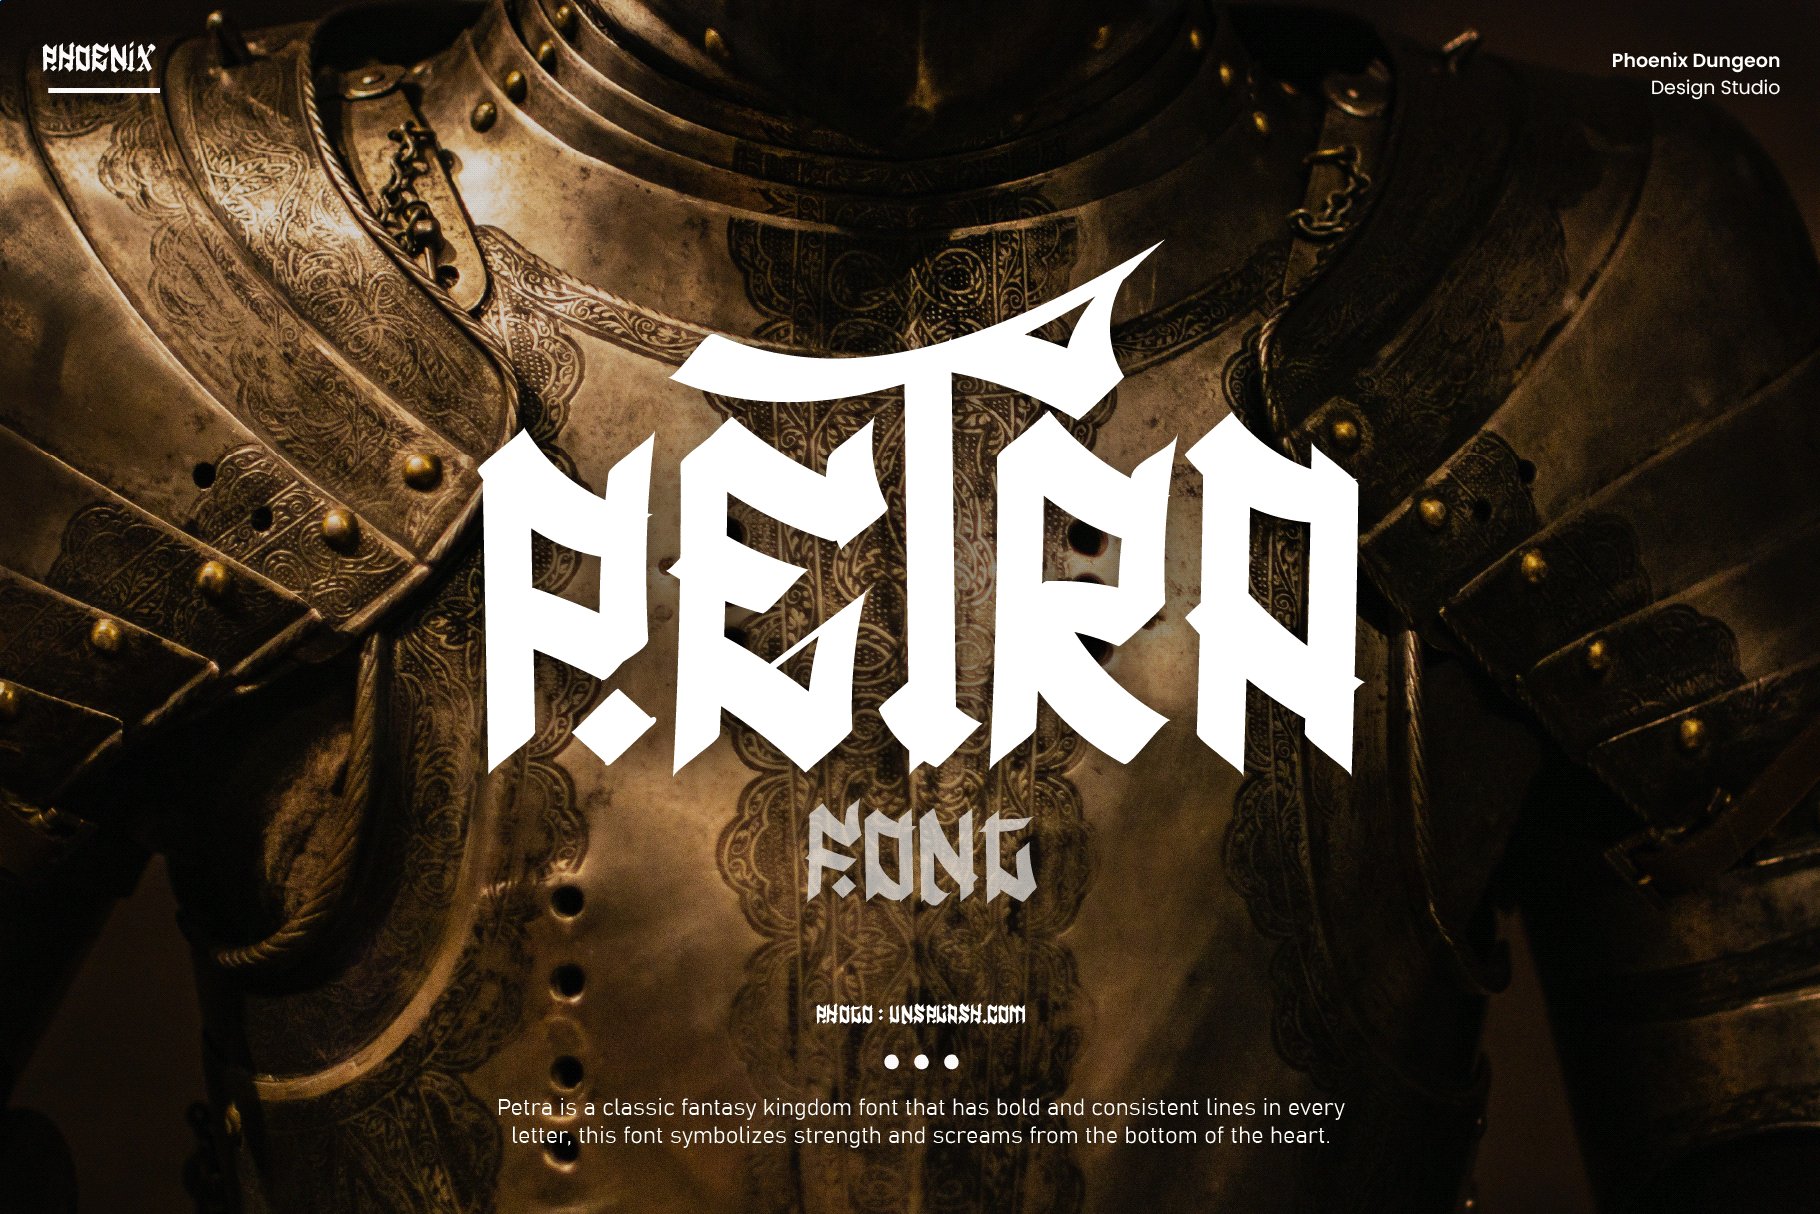 Petra Font cover image.